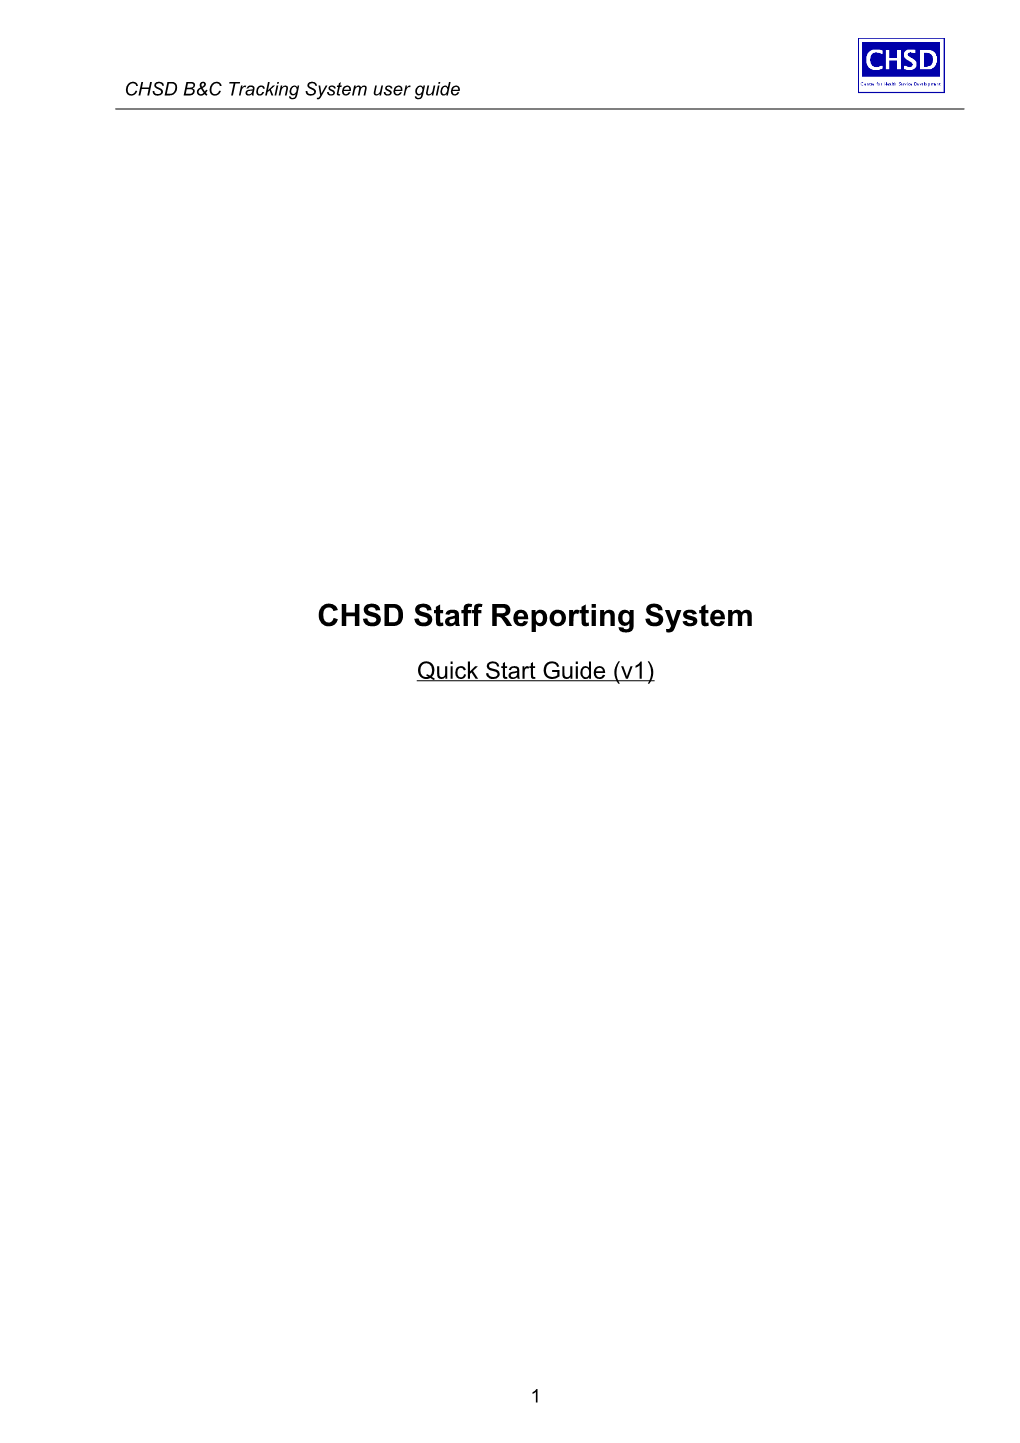 CHSD Staff Reporting System